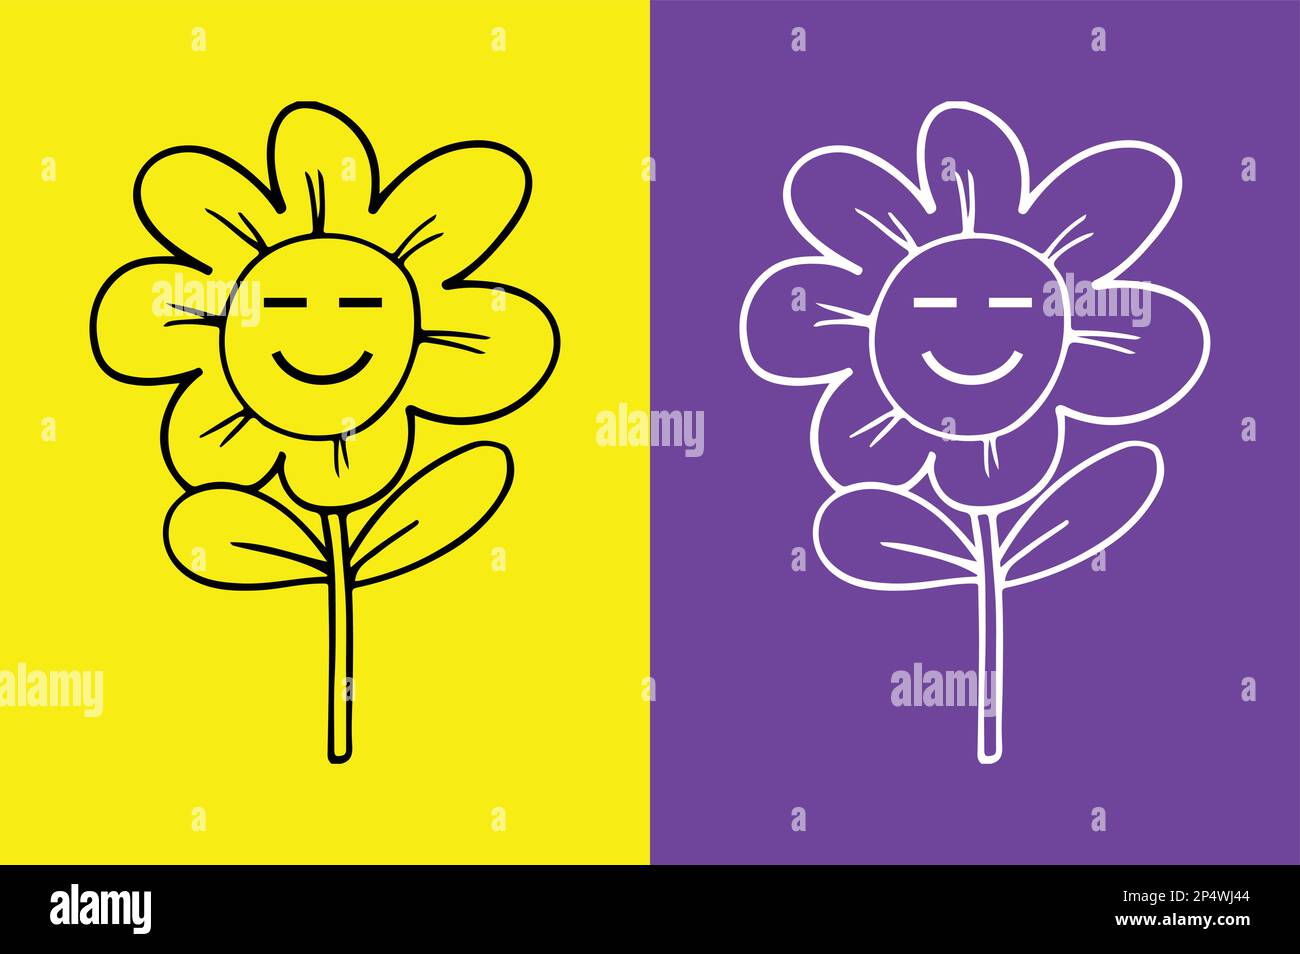 Undertale Flowey Drawing, flower, food, sunflower, flower png